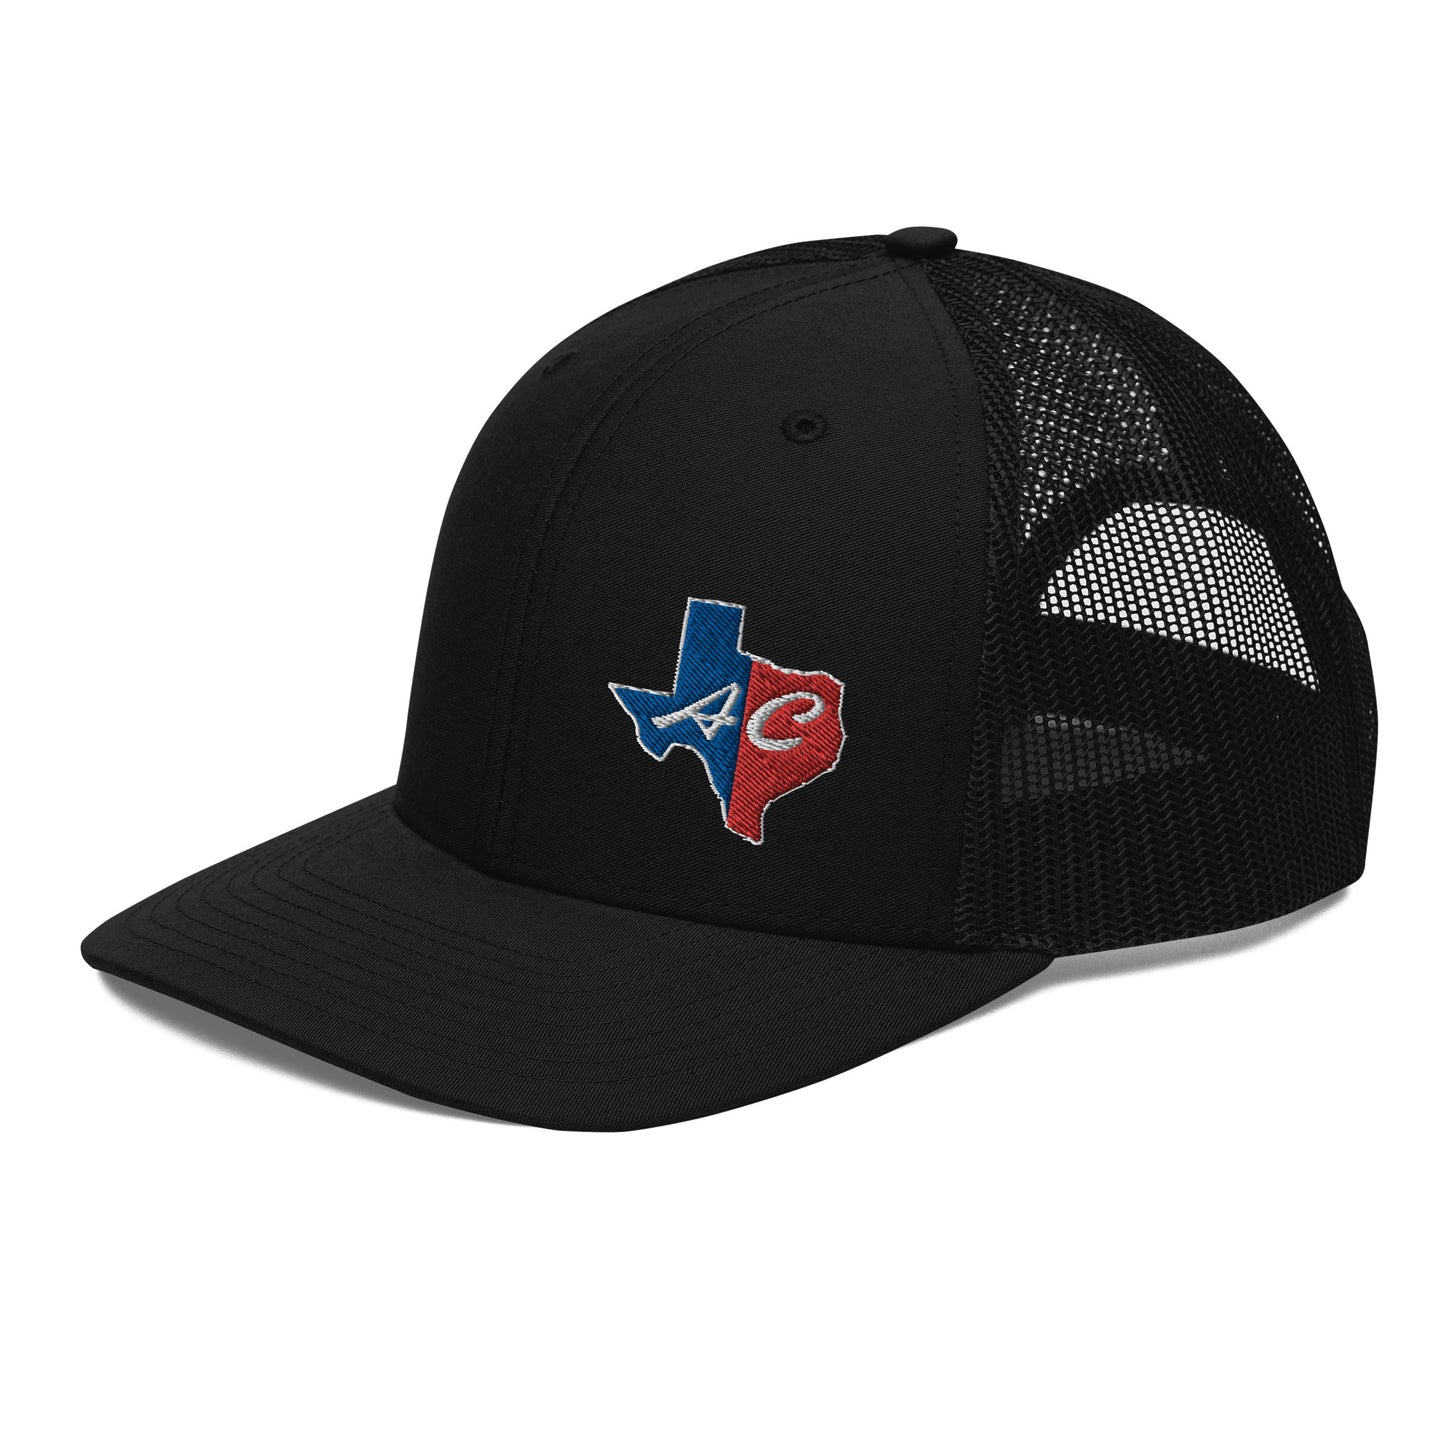 AC Texas - Richardson 112 - Snapback